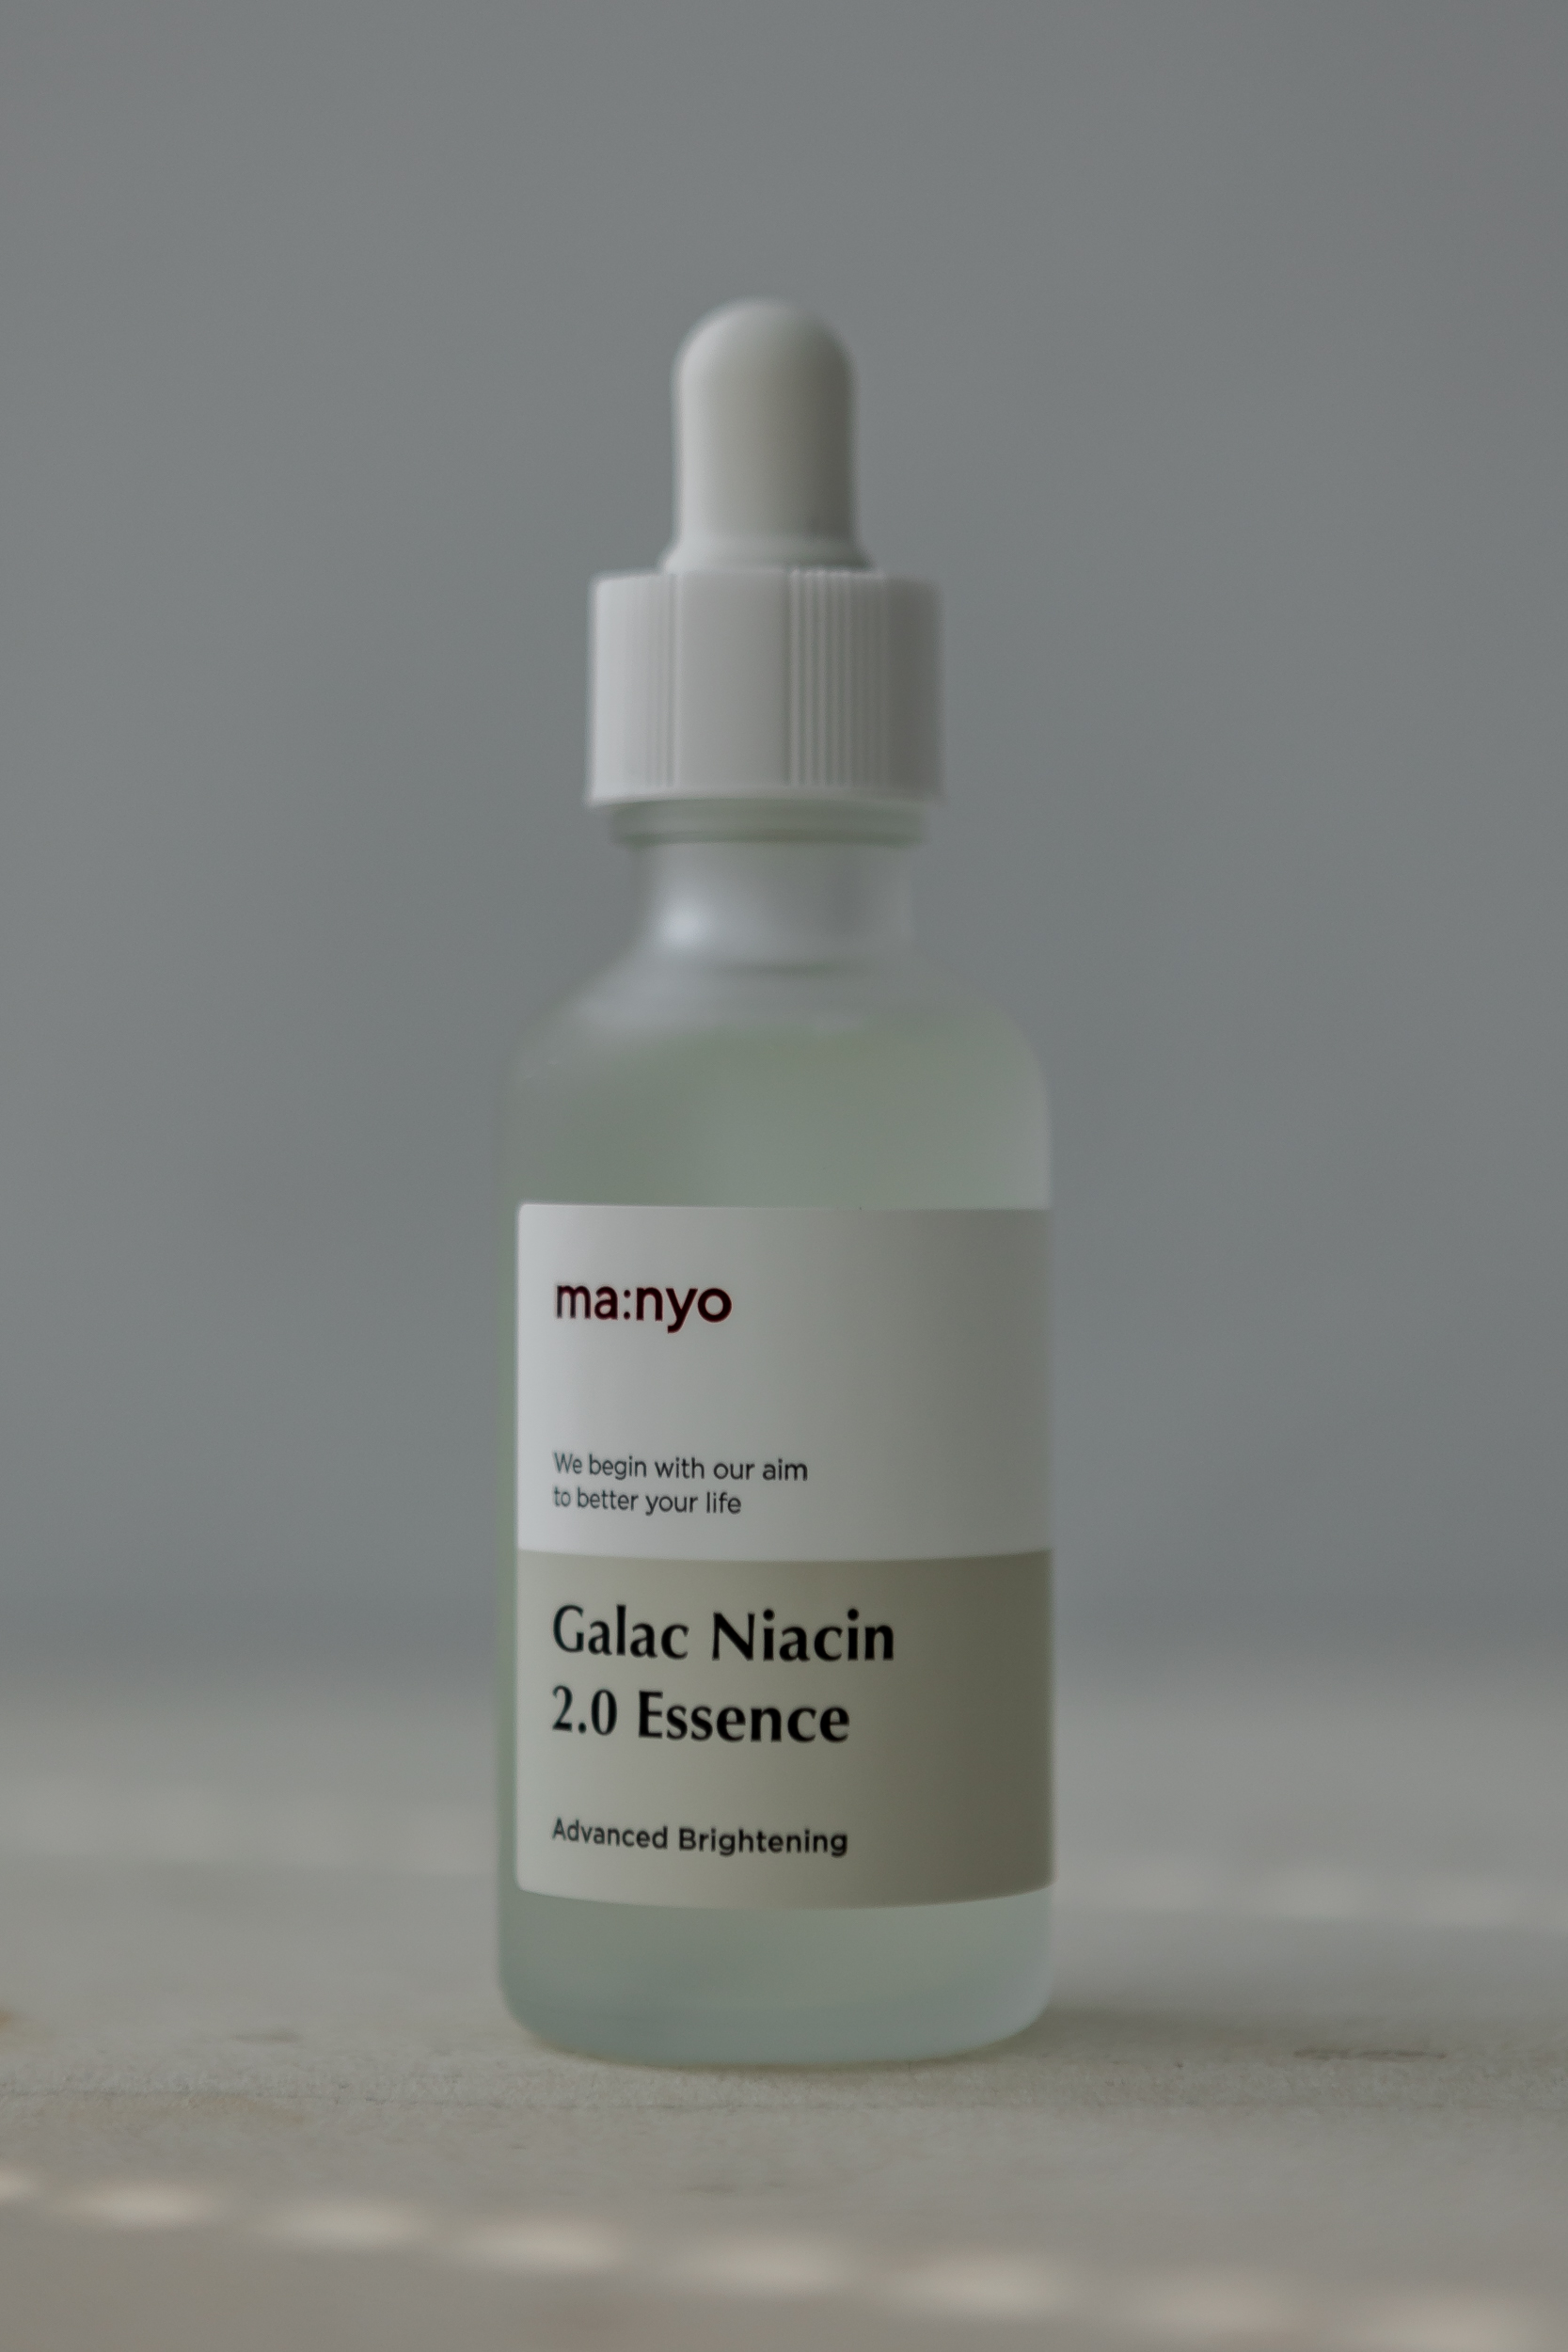 Galac niacin 2.0 essence